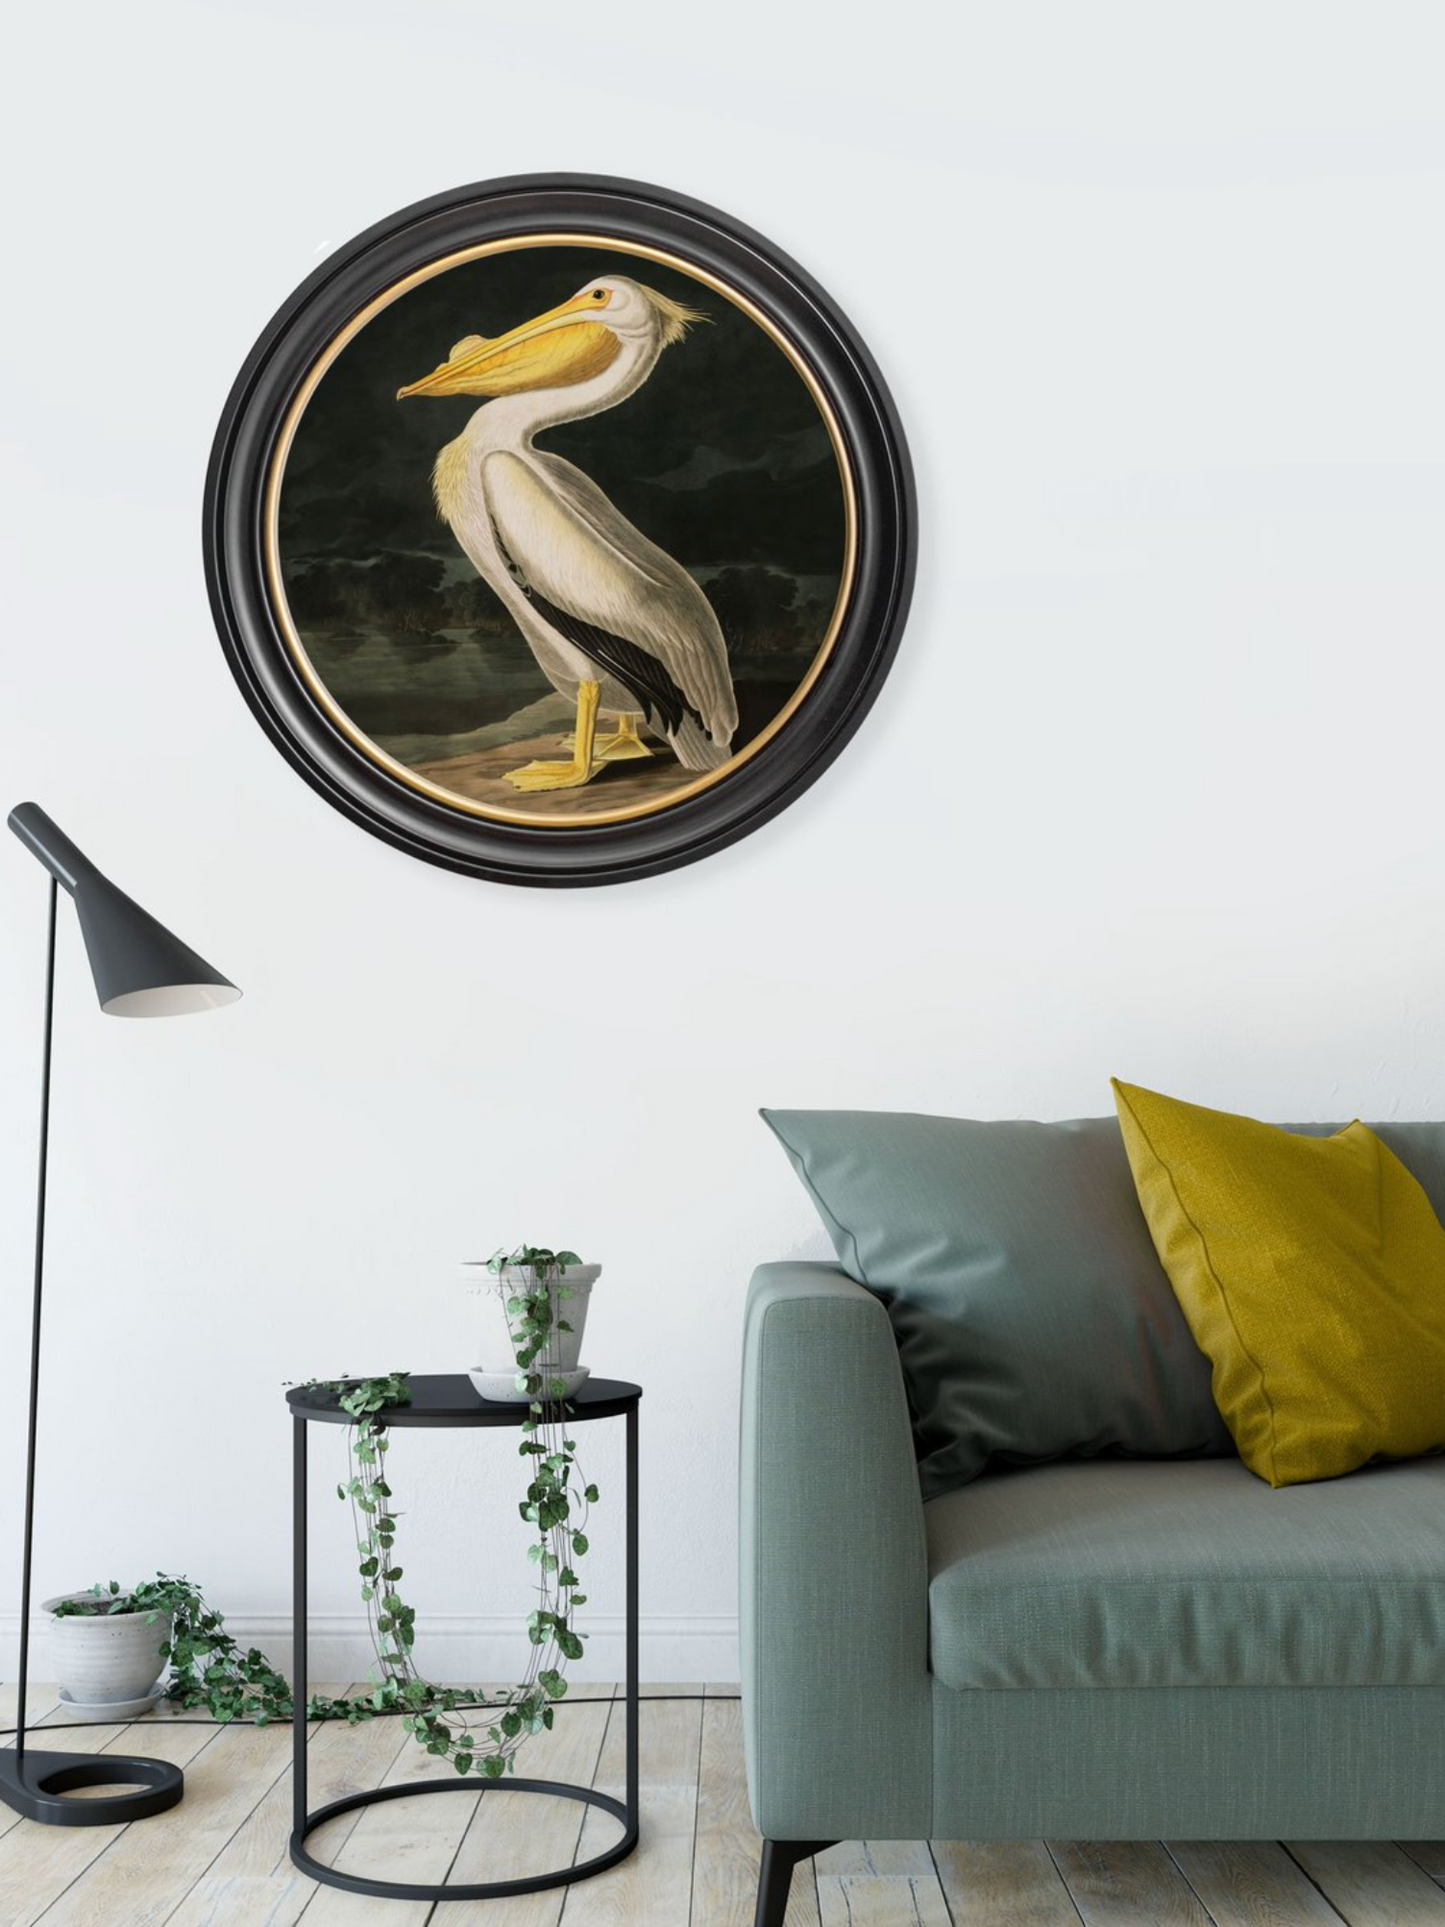 Vintage Round Framed Print, Pelican